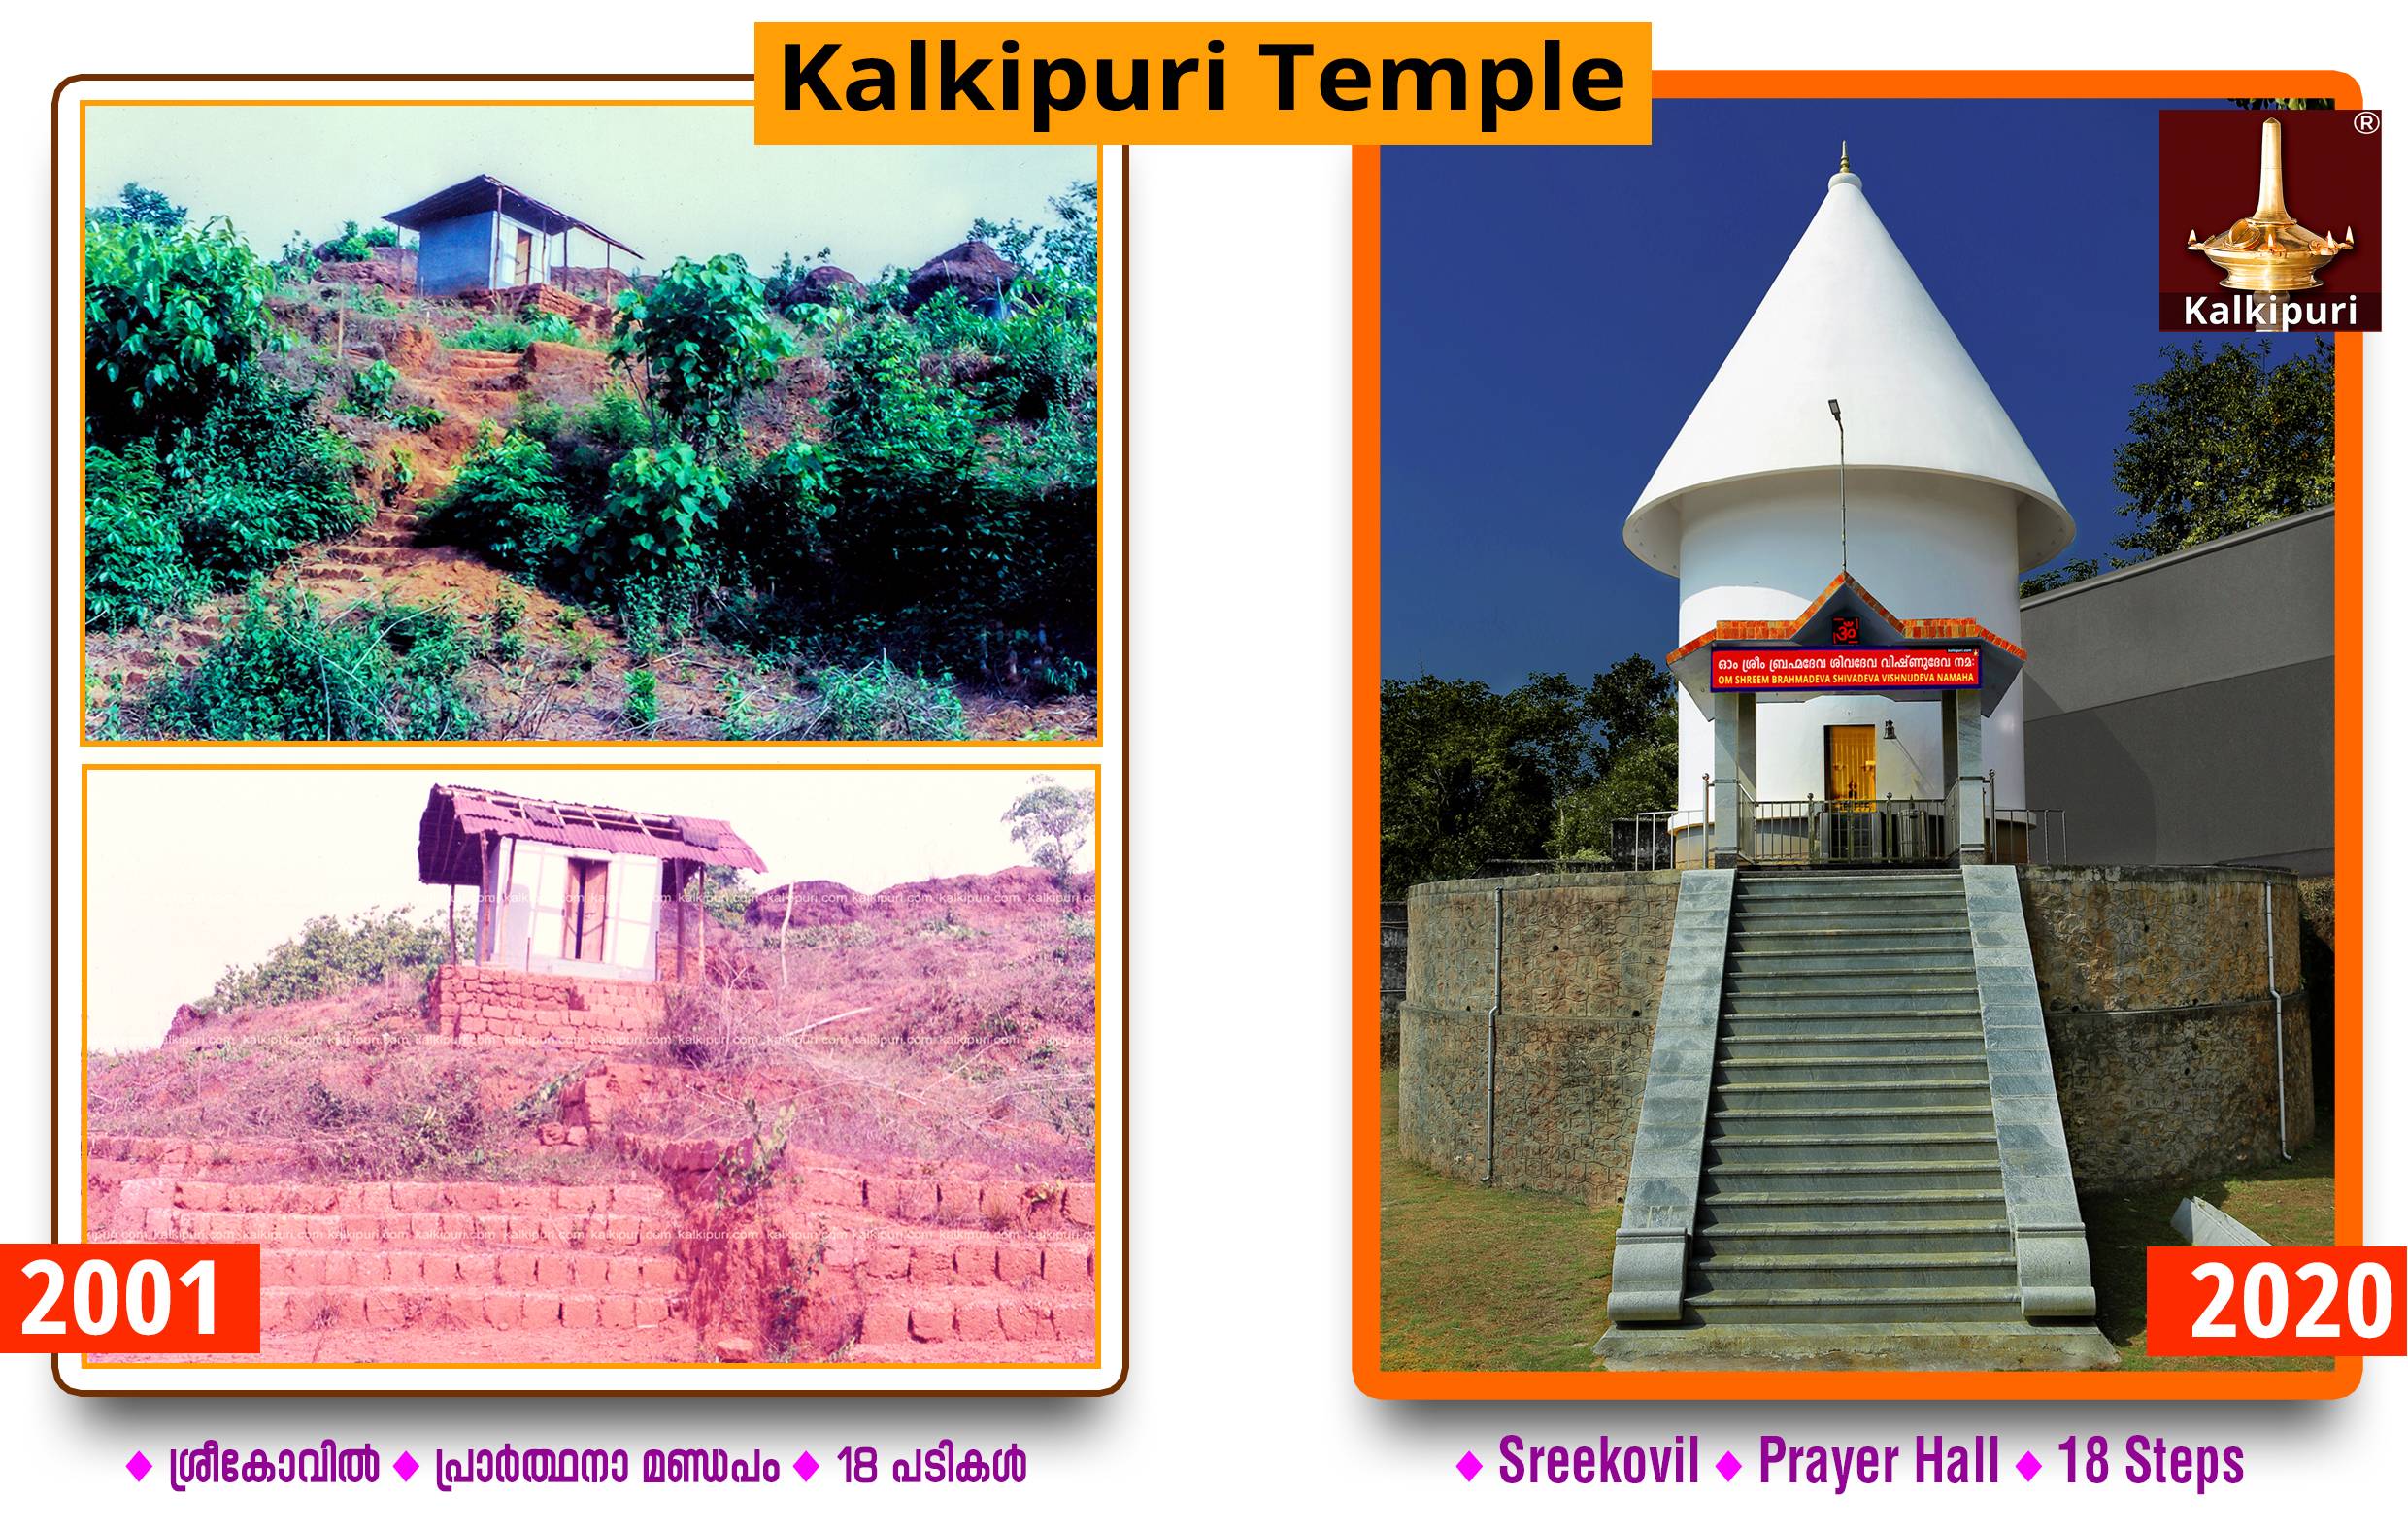 Kalkipuri Temple Estd 2001 by Kalki in His birth place